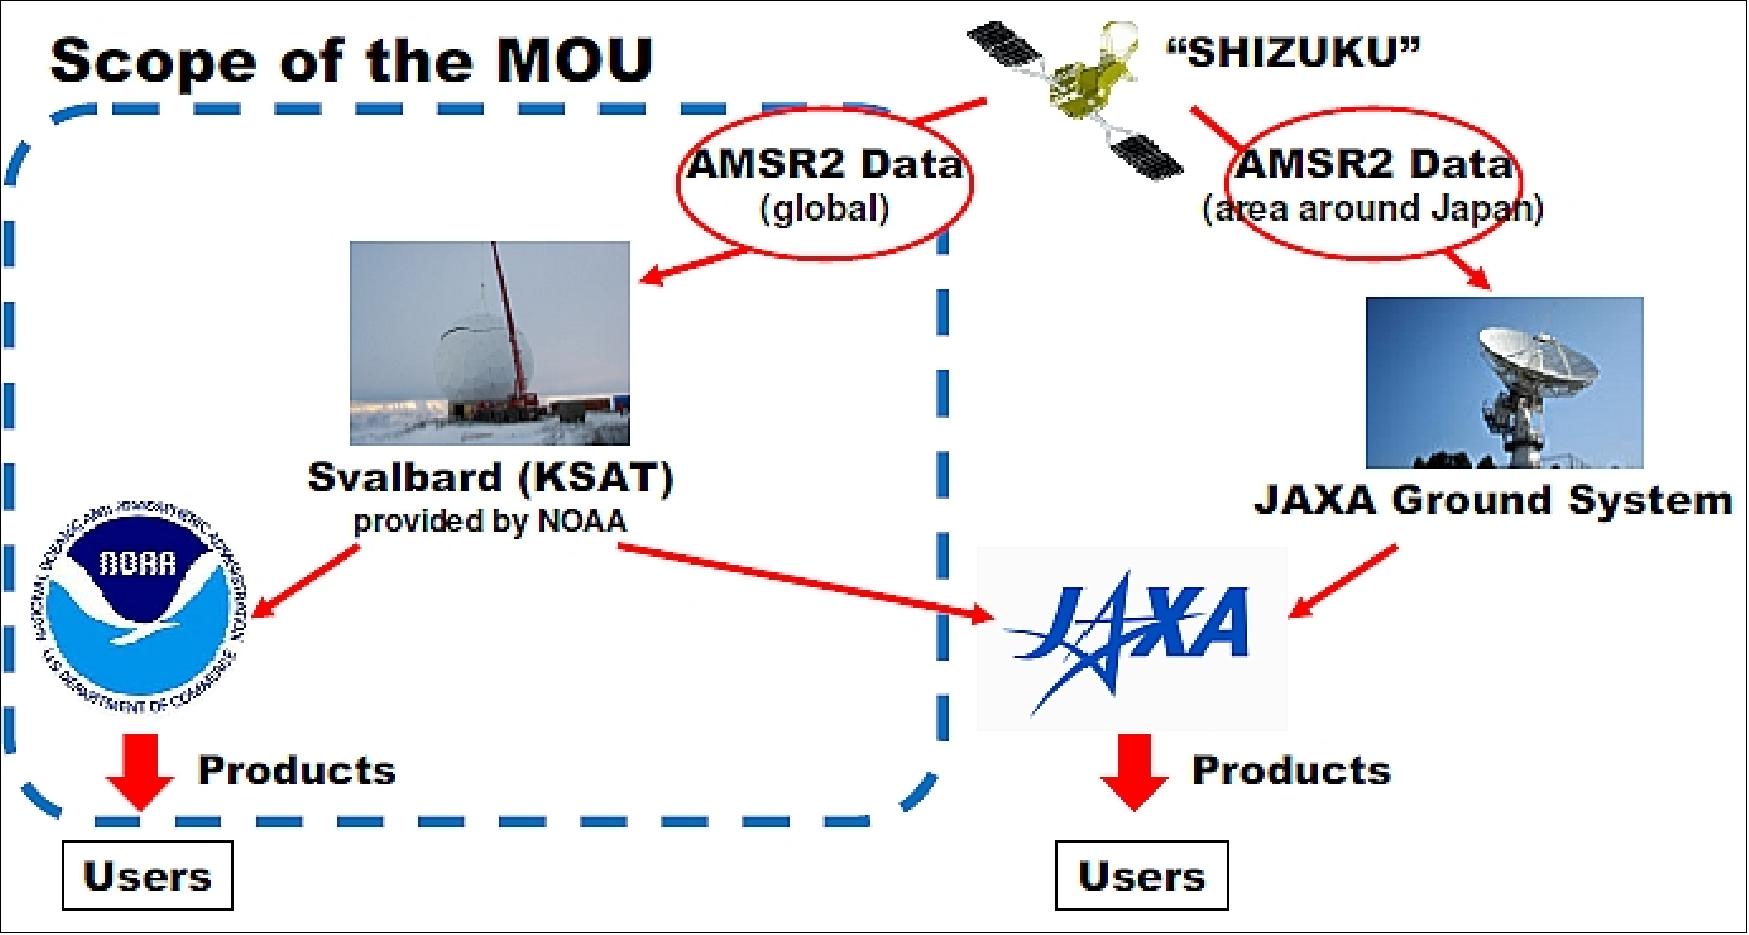 Figure 36: Cooperation between JAXA and NOAA regarding AMSR2 data of GCOM-W1 (image credit: JAXA, Ref. 29)